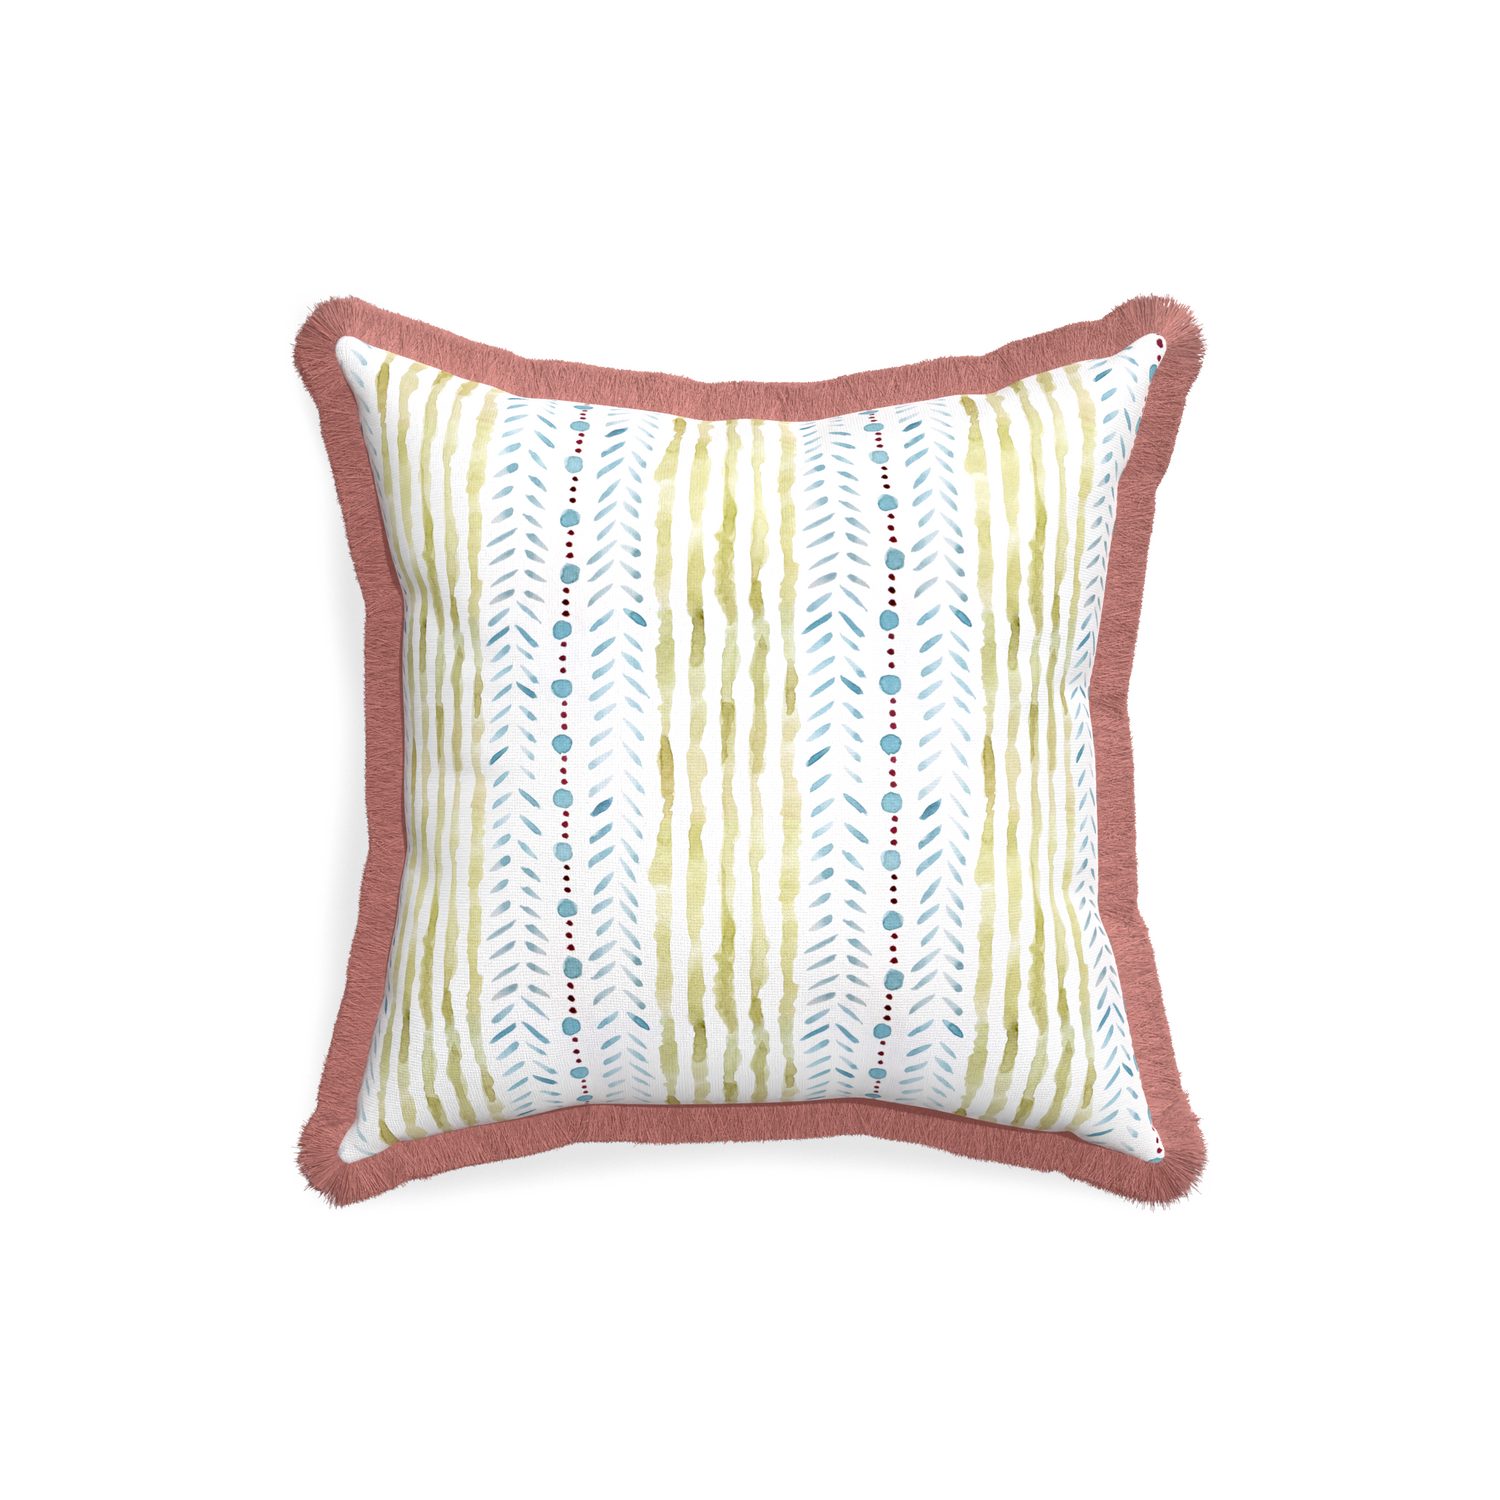 18-square julia custom pillow with d fringe on white background